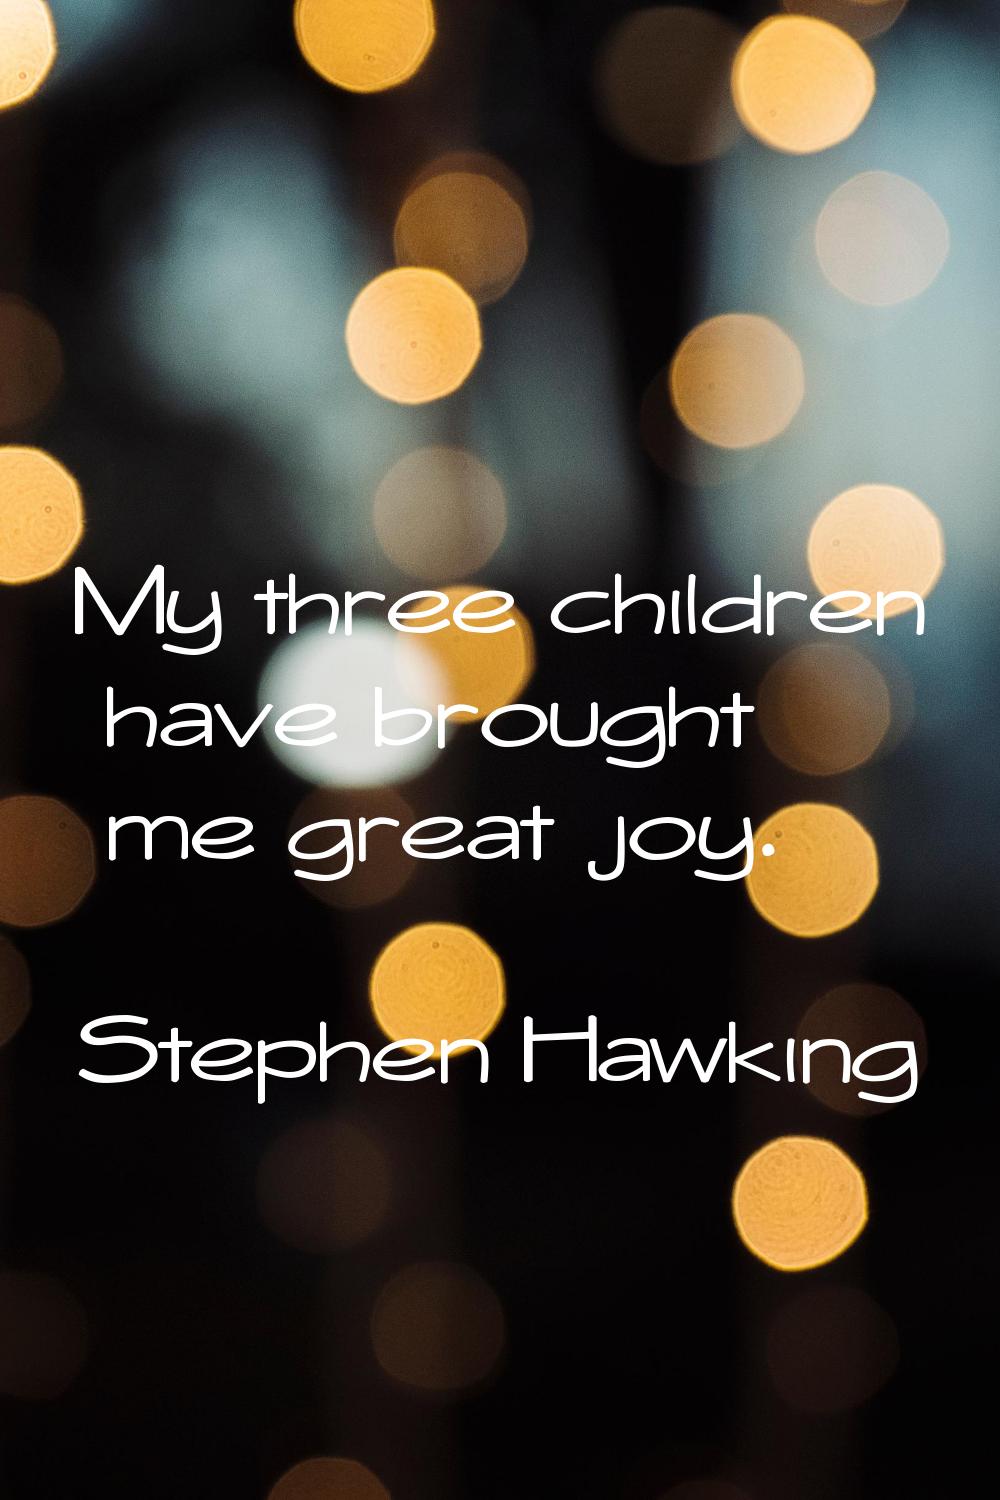 My three children have brought me great joy.